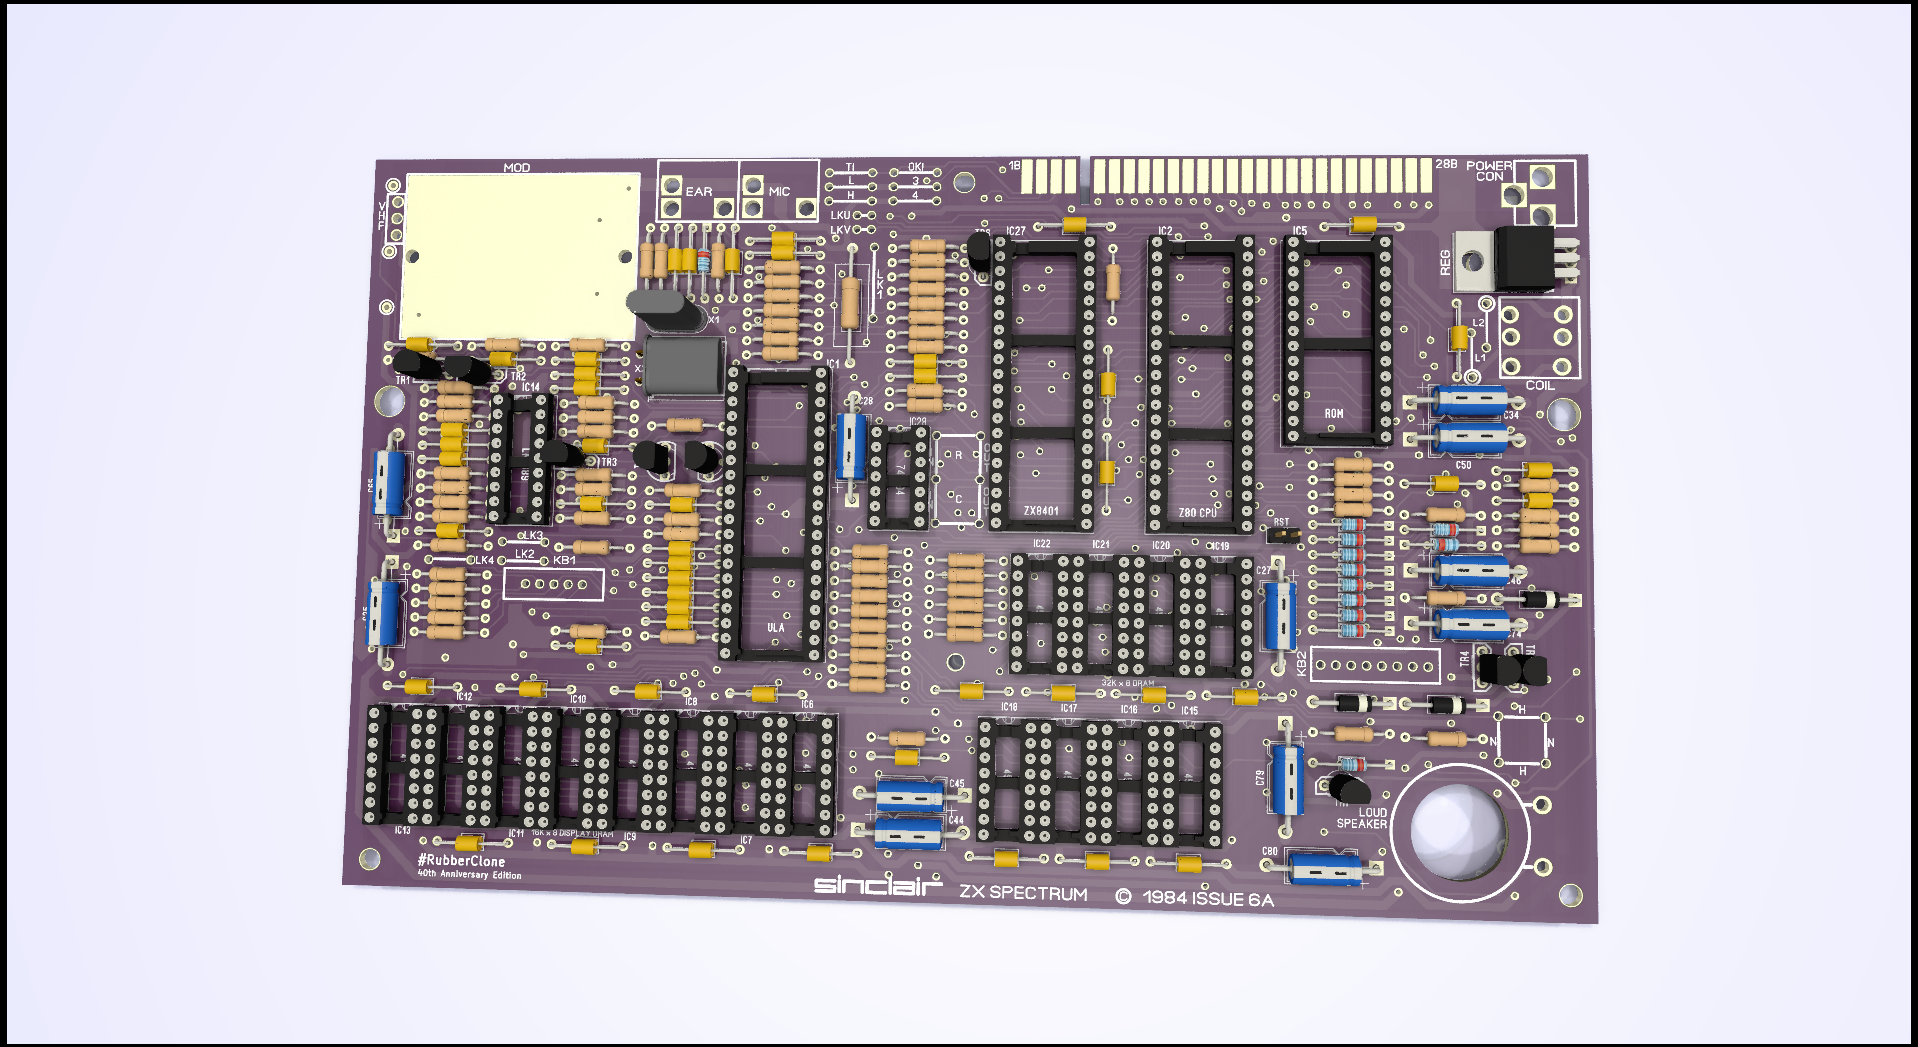 GitHub - pmandes/zx-spectrum-issue6a-replica: ZX Spectrum 48k 